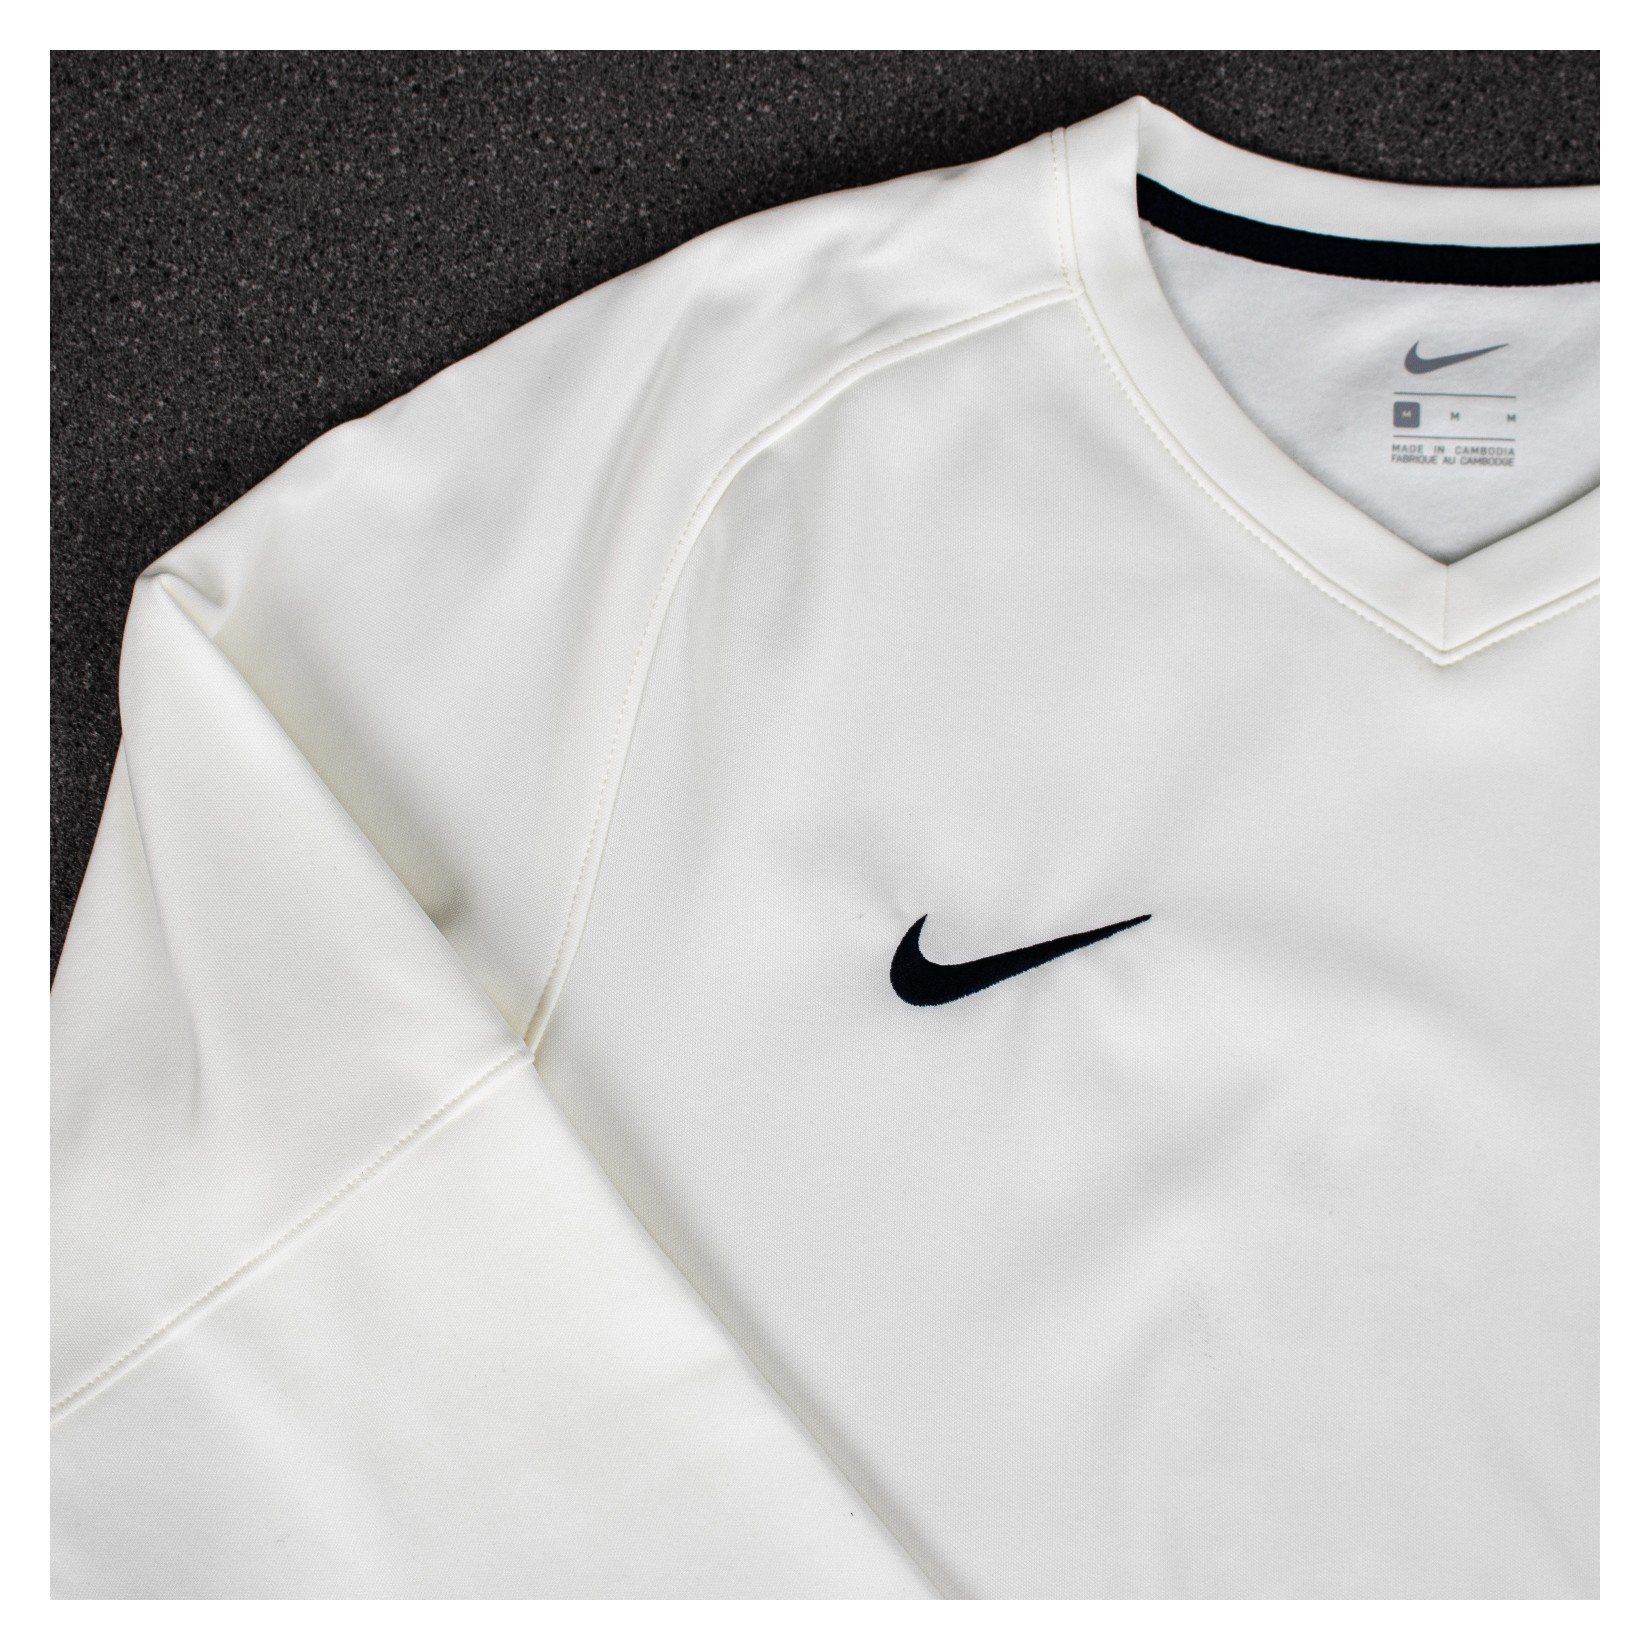 Nike Cricket Long Sleeve Thermal Top - Kitlocker.com